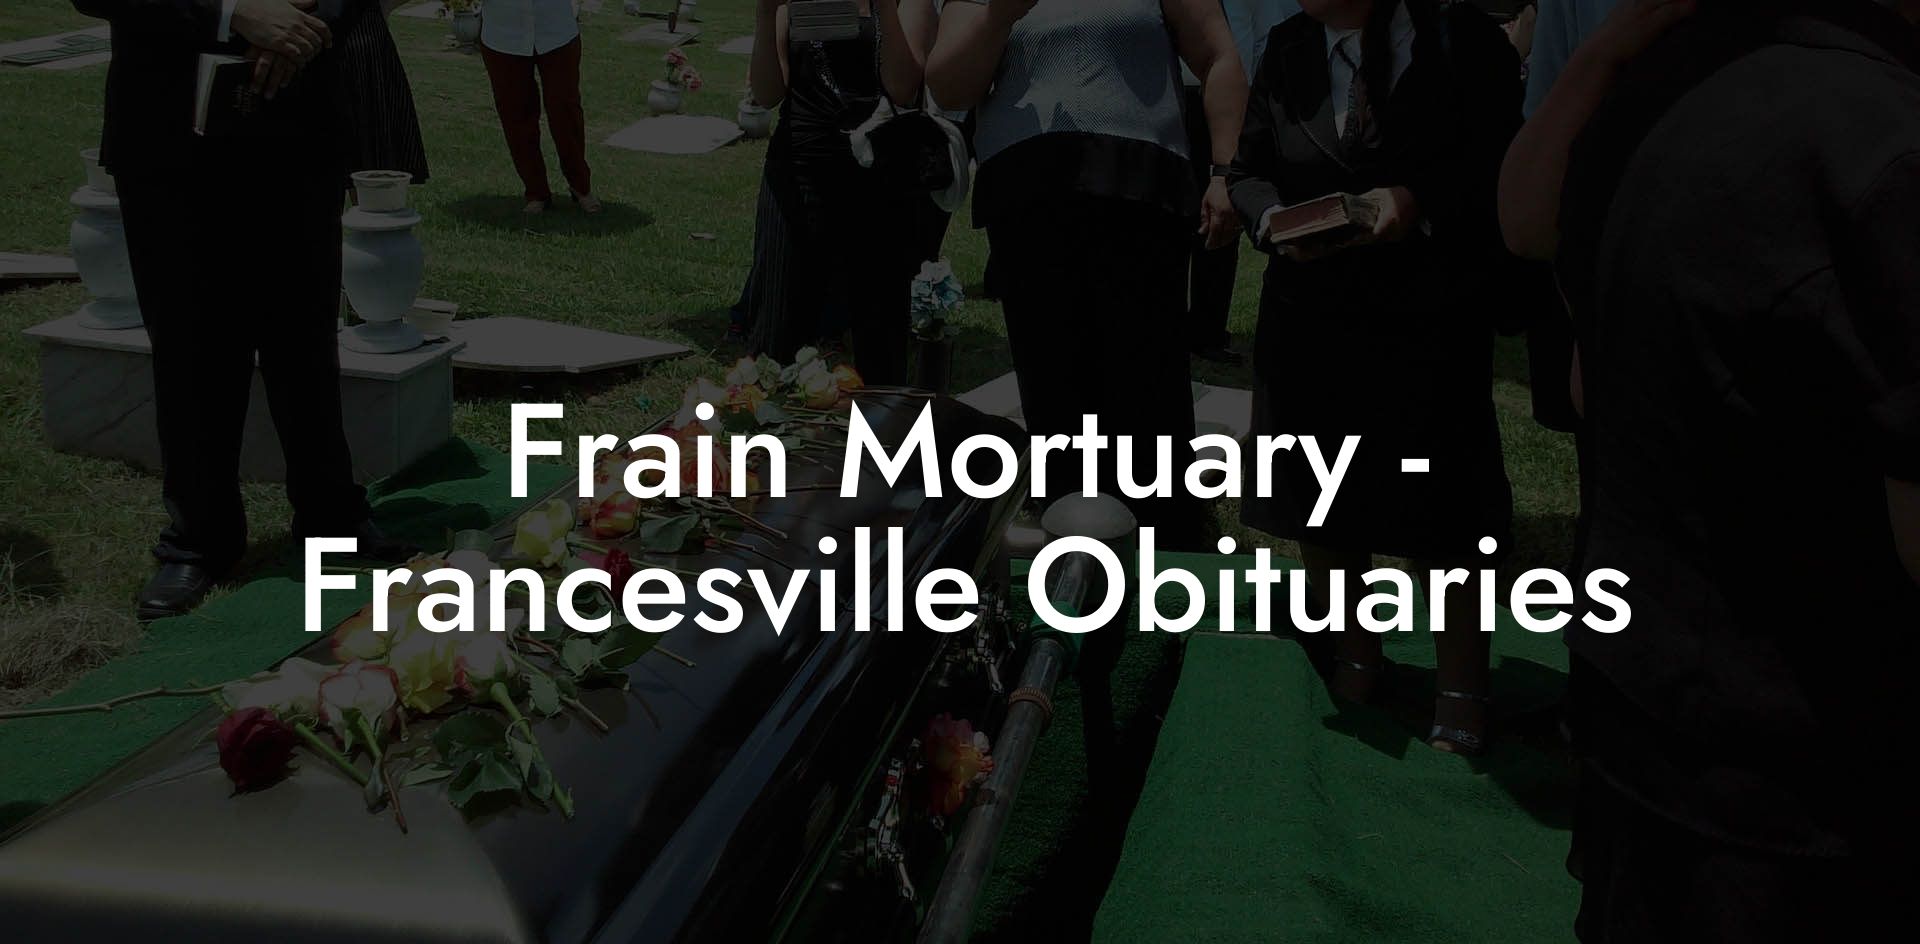 Frain Mortuary - Francesville Obituaries